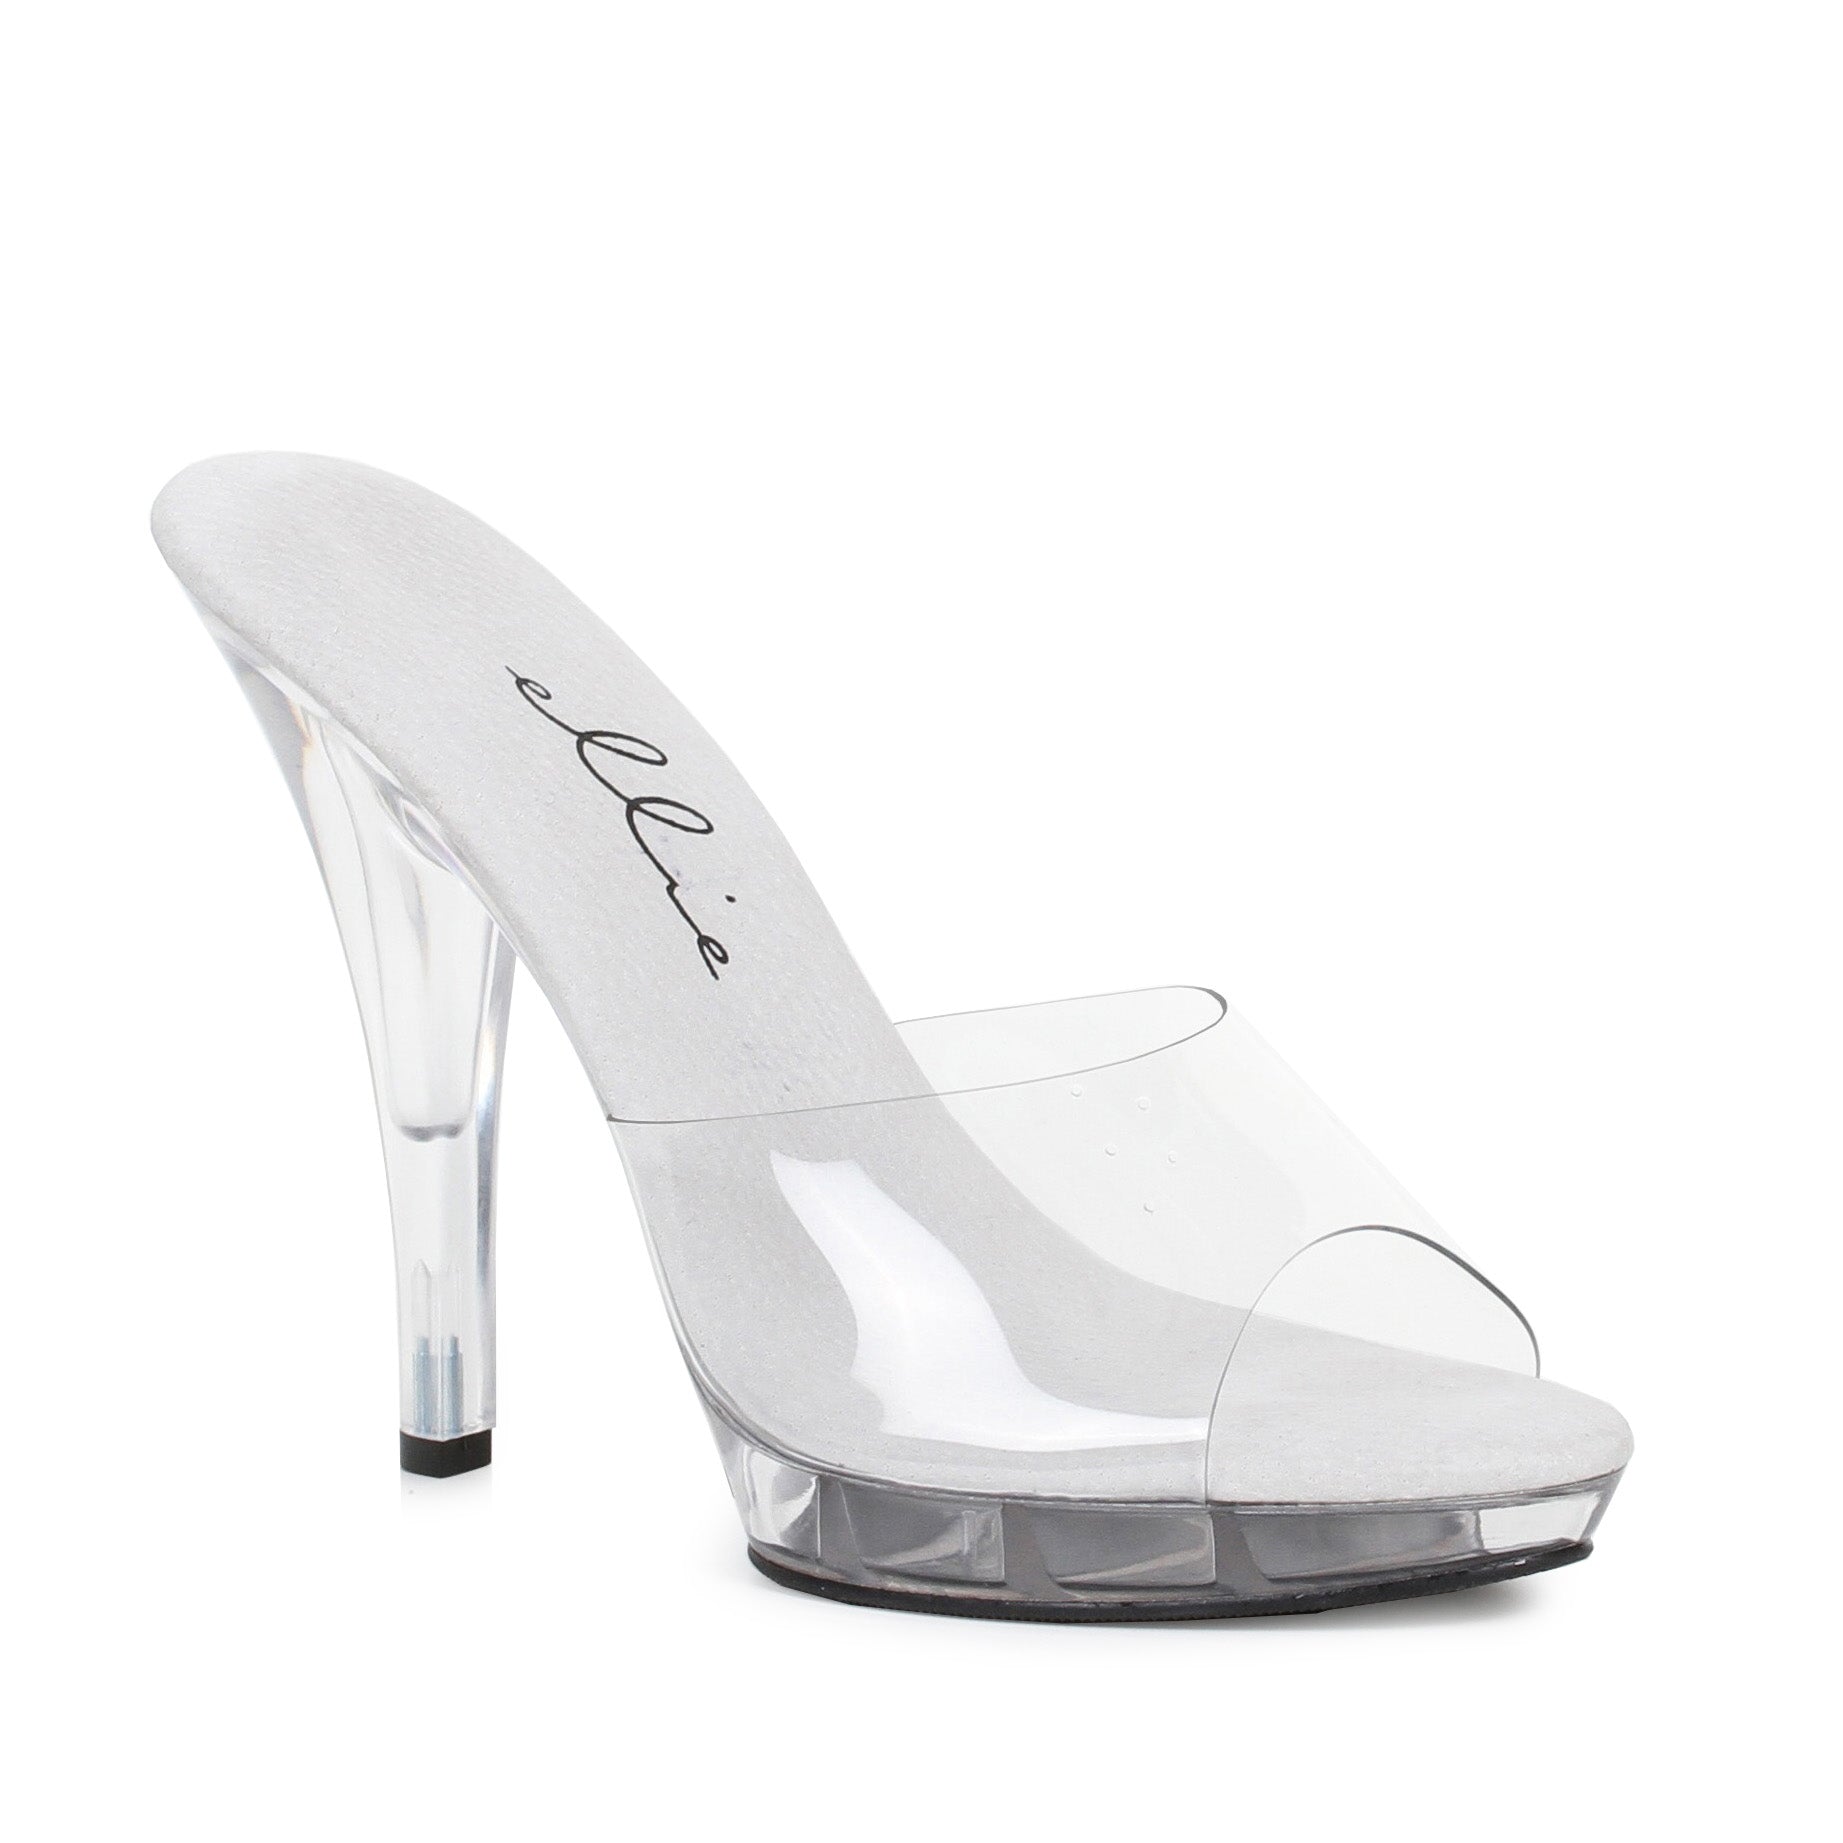 521-VANITY-W Ellie Shoes 5"  Heel Clear Wide Width Sandal. COMPETITIO EXTENDED S 5 INCH HEEL